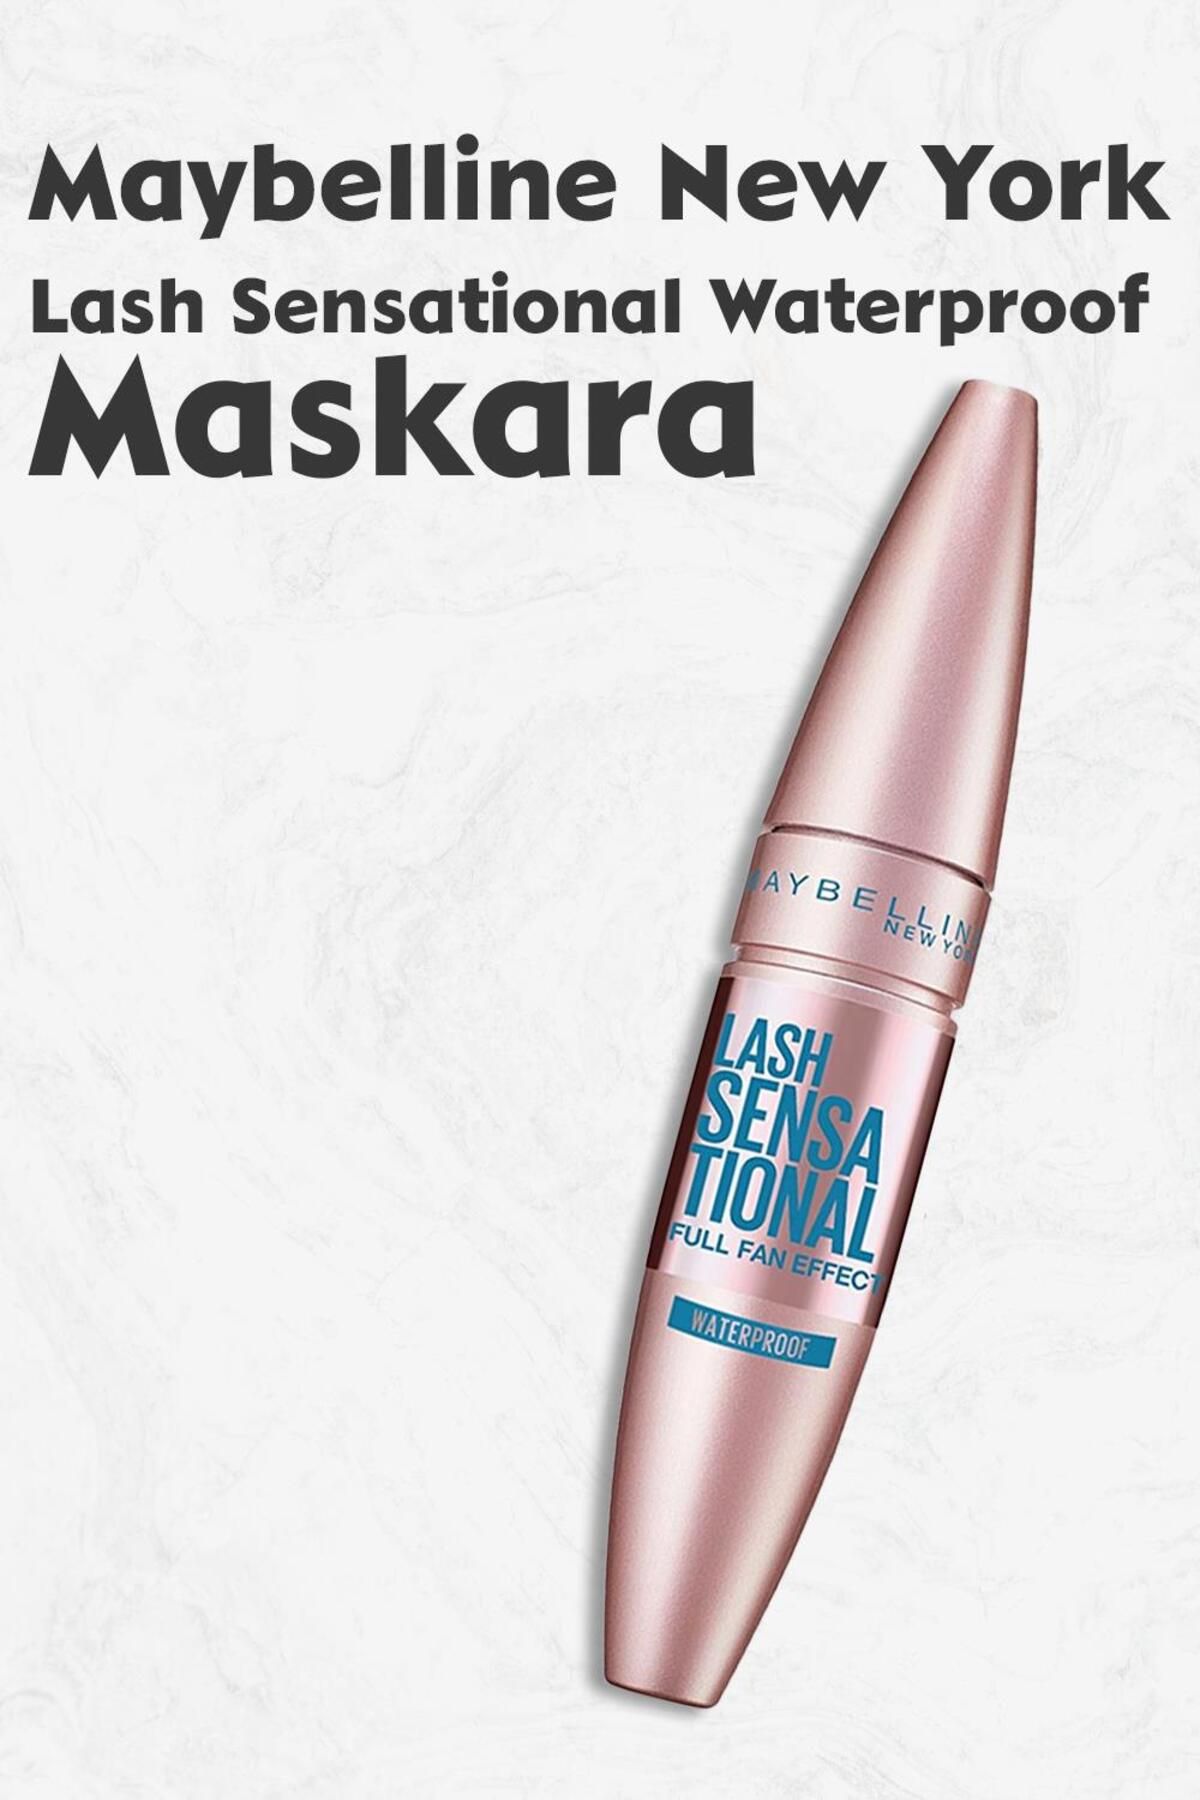 Maybelline New York Maskara Lash Sensational Waterproof